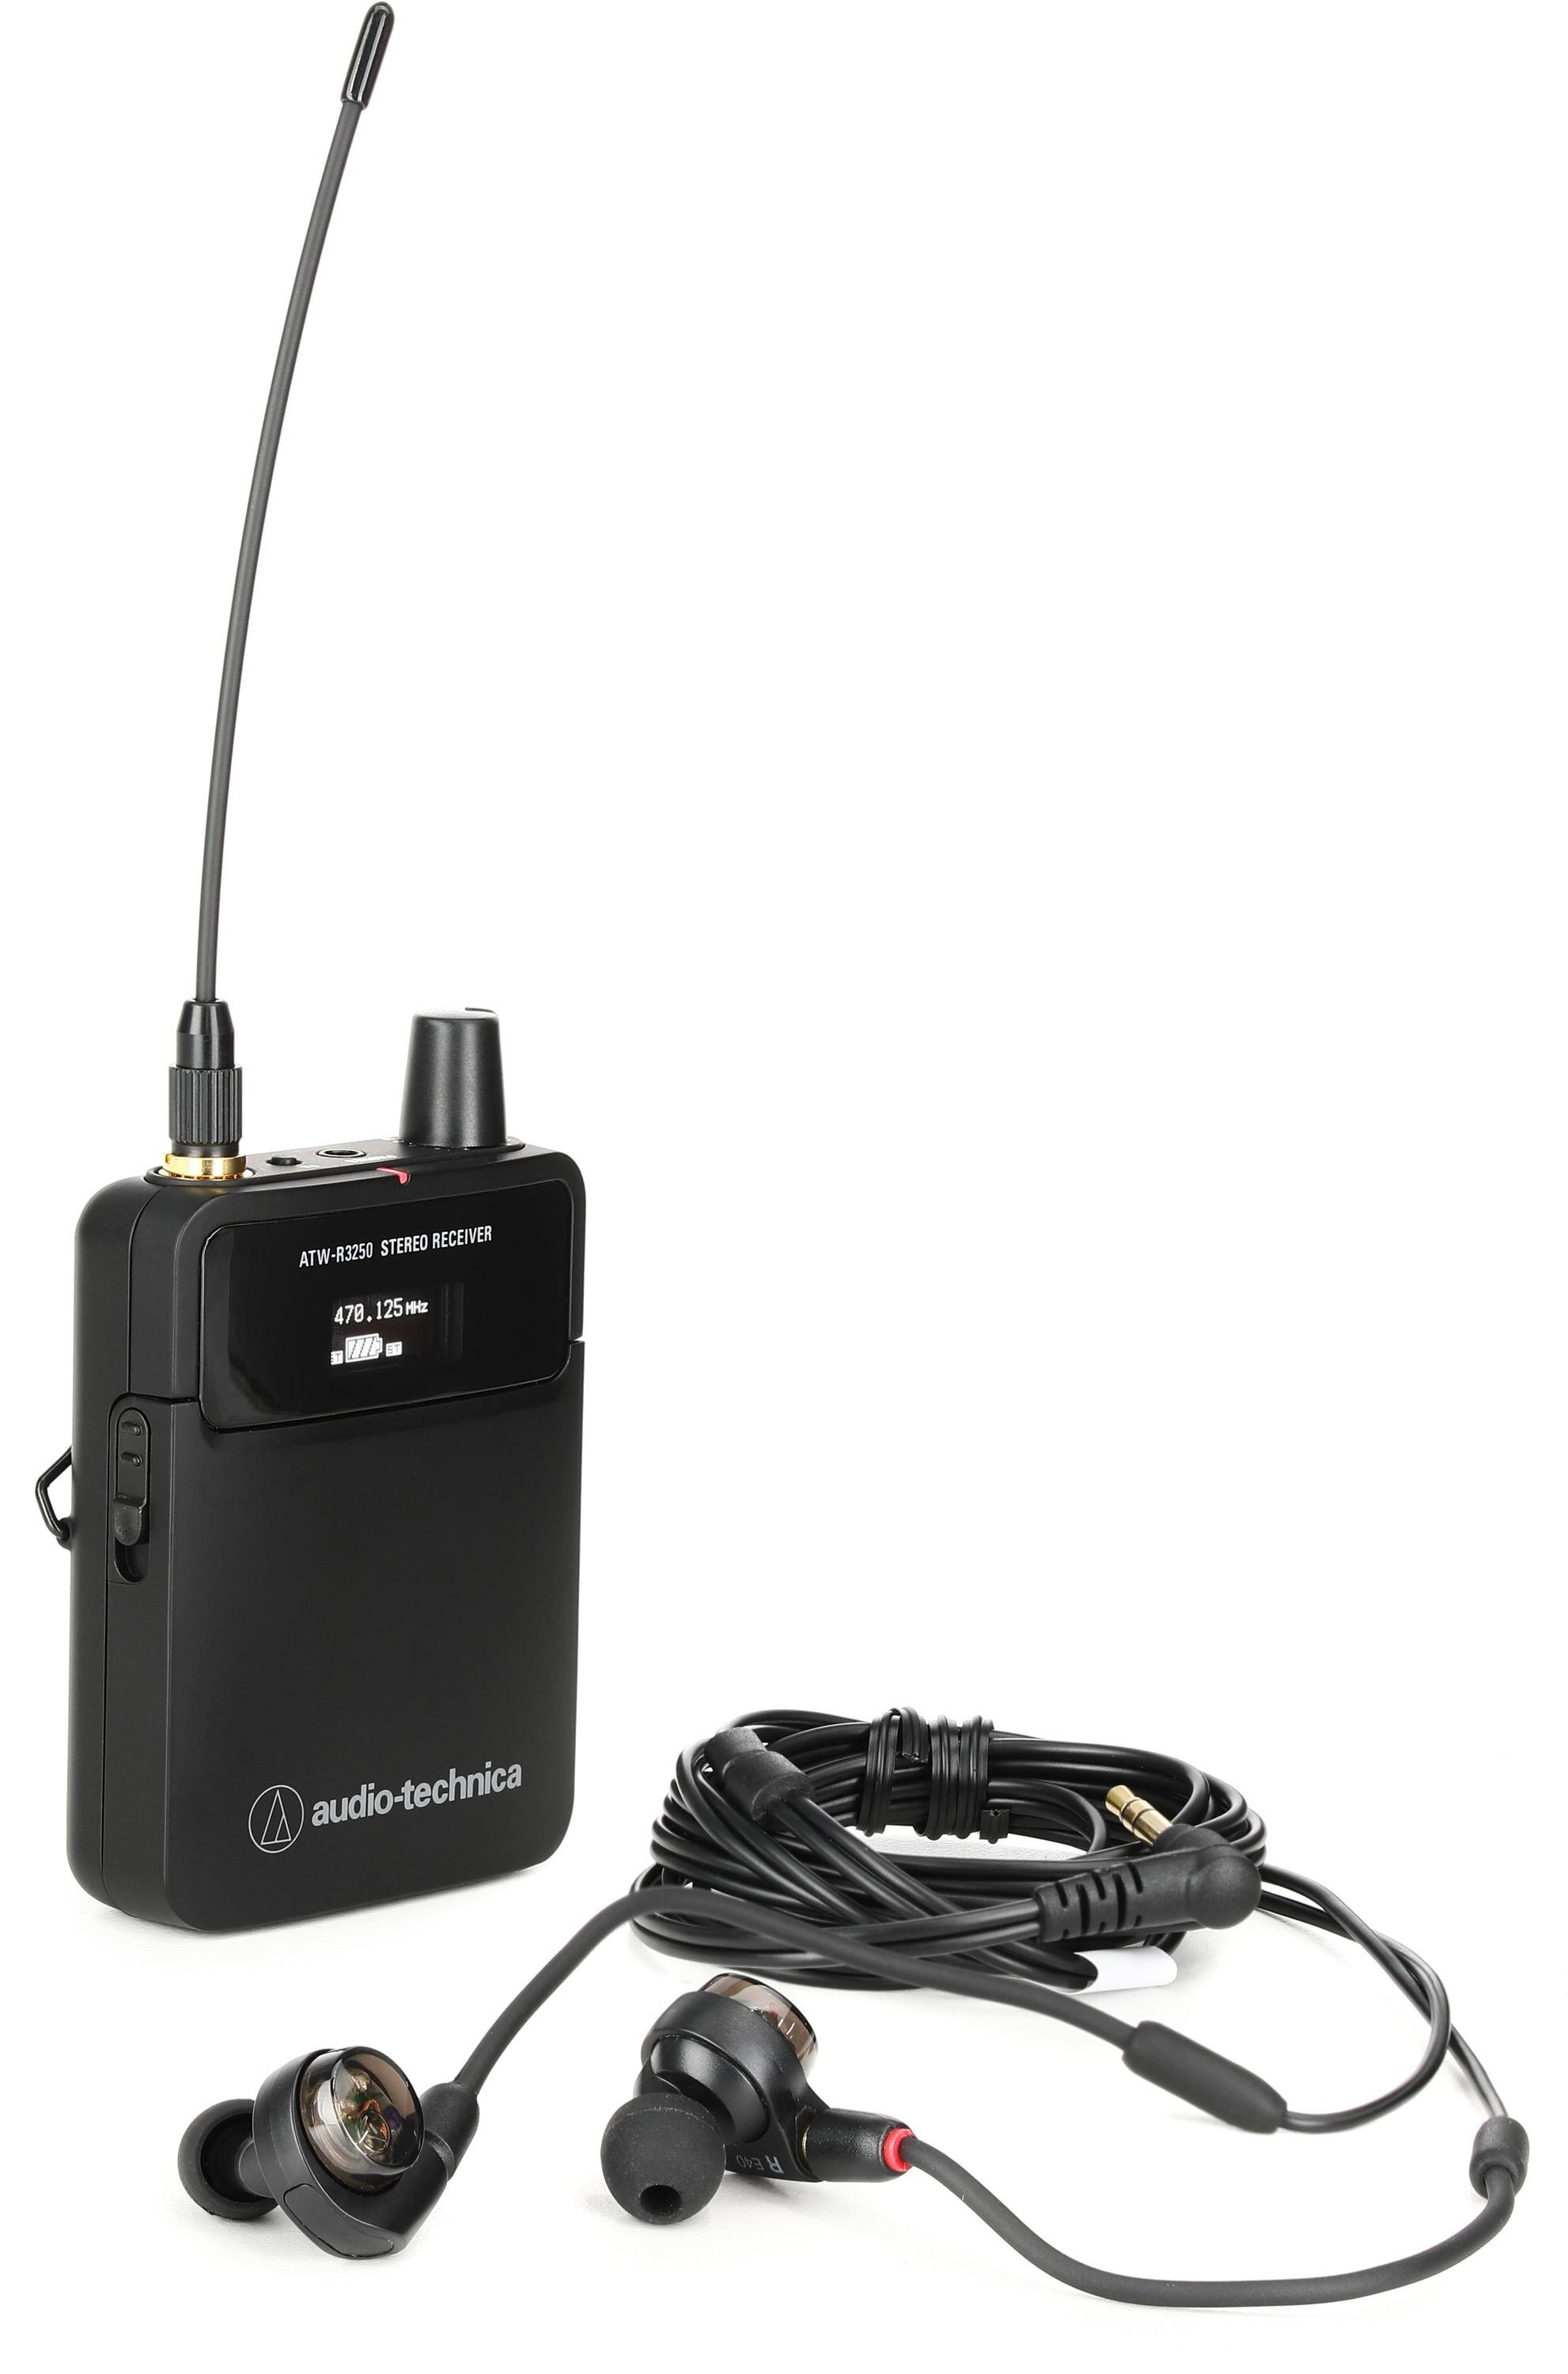 Audio-Technica ATH-E40 Professional In-Ear Monitor Headphones BONUS PAK